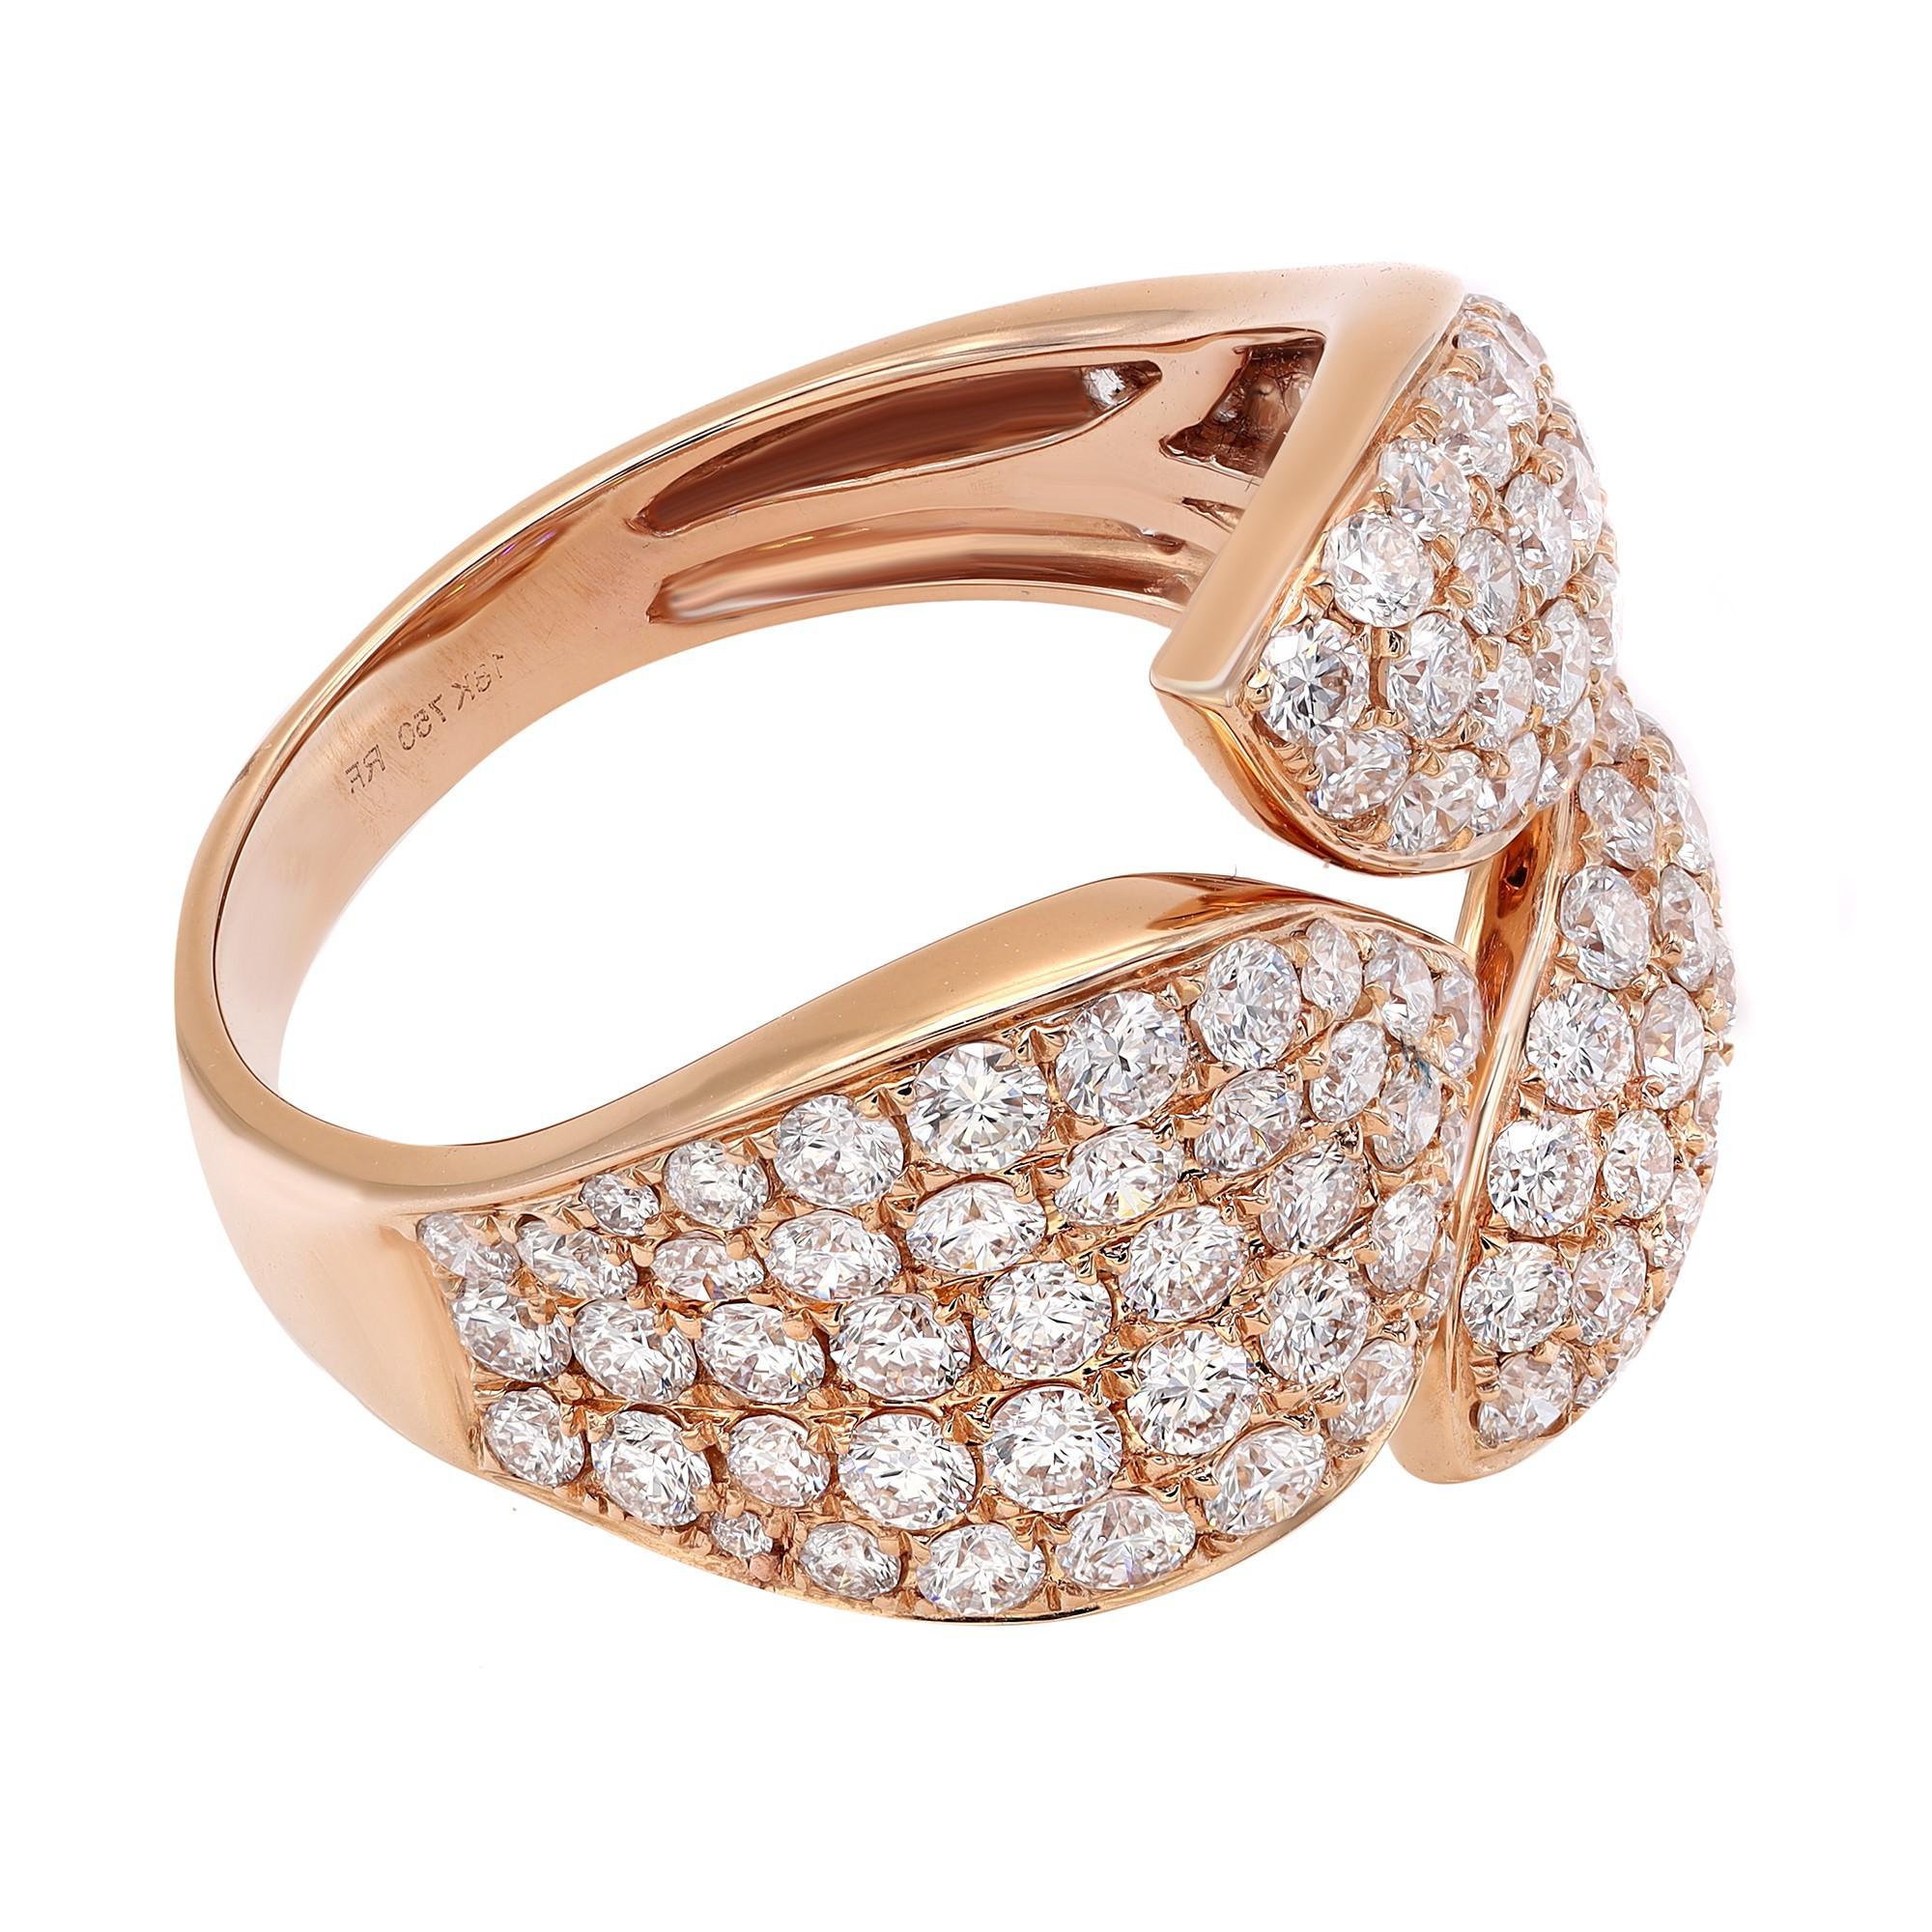 Rachel Koen Pave Set Round Cut Diamond Ring 18K Rose Gold 2.00Cttw For Sale 1